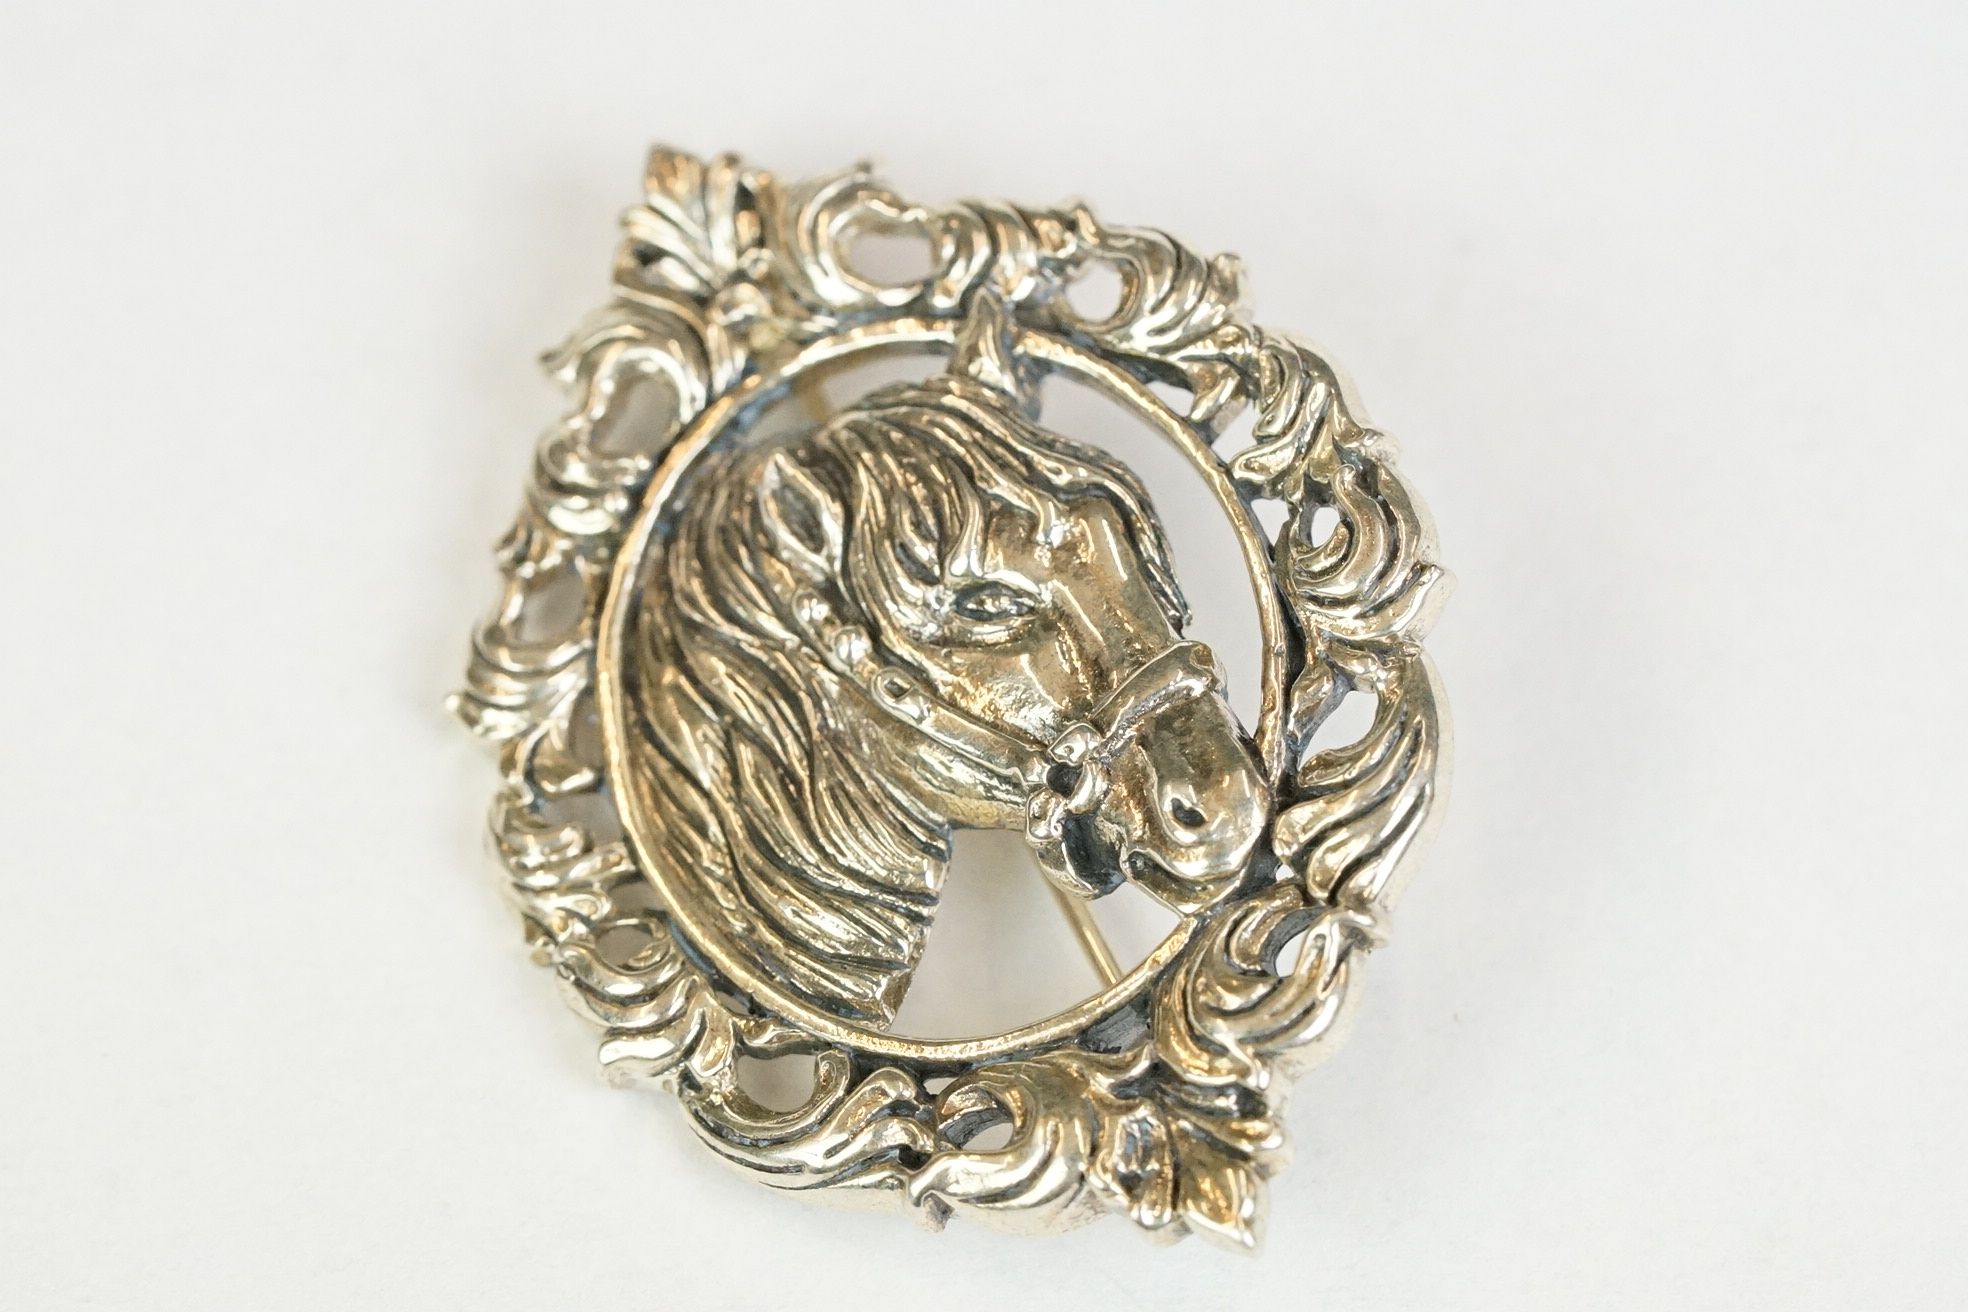 Silver horse brooch